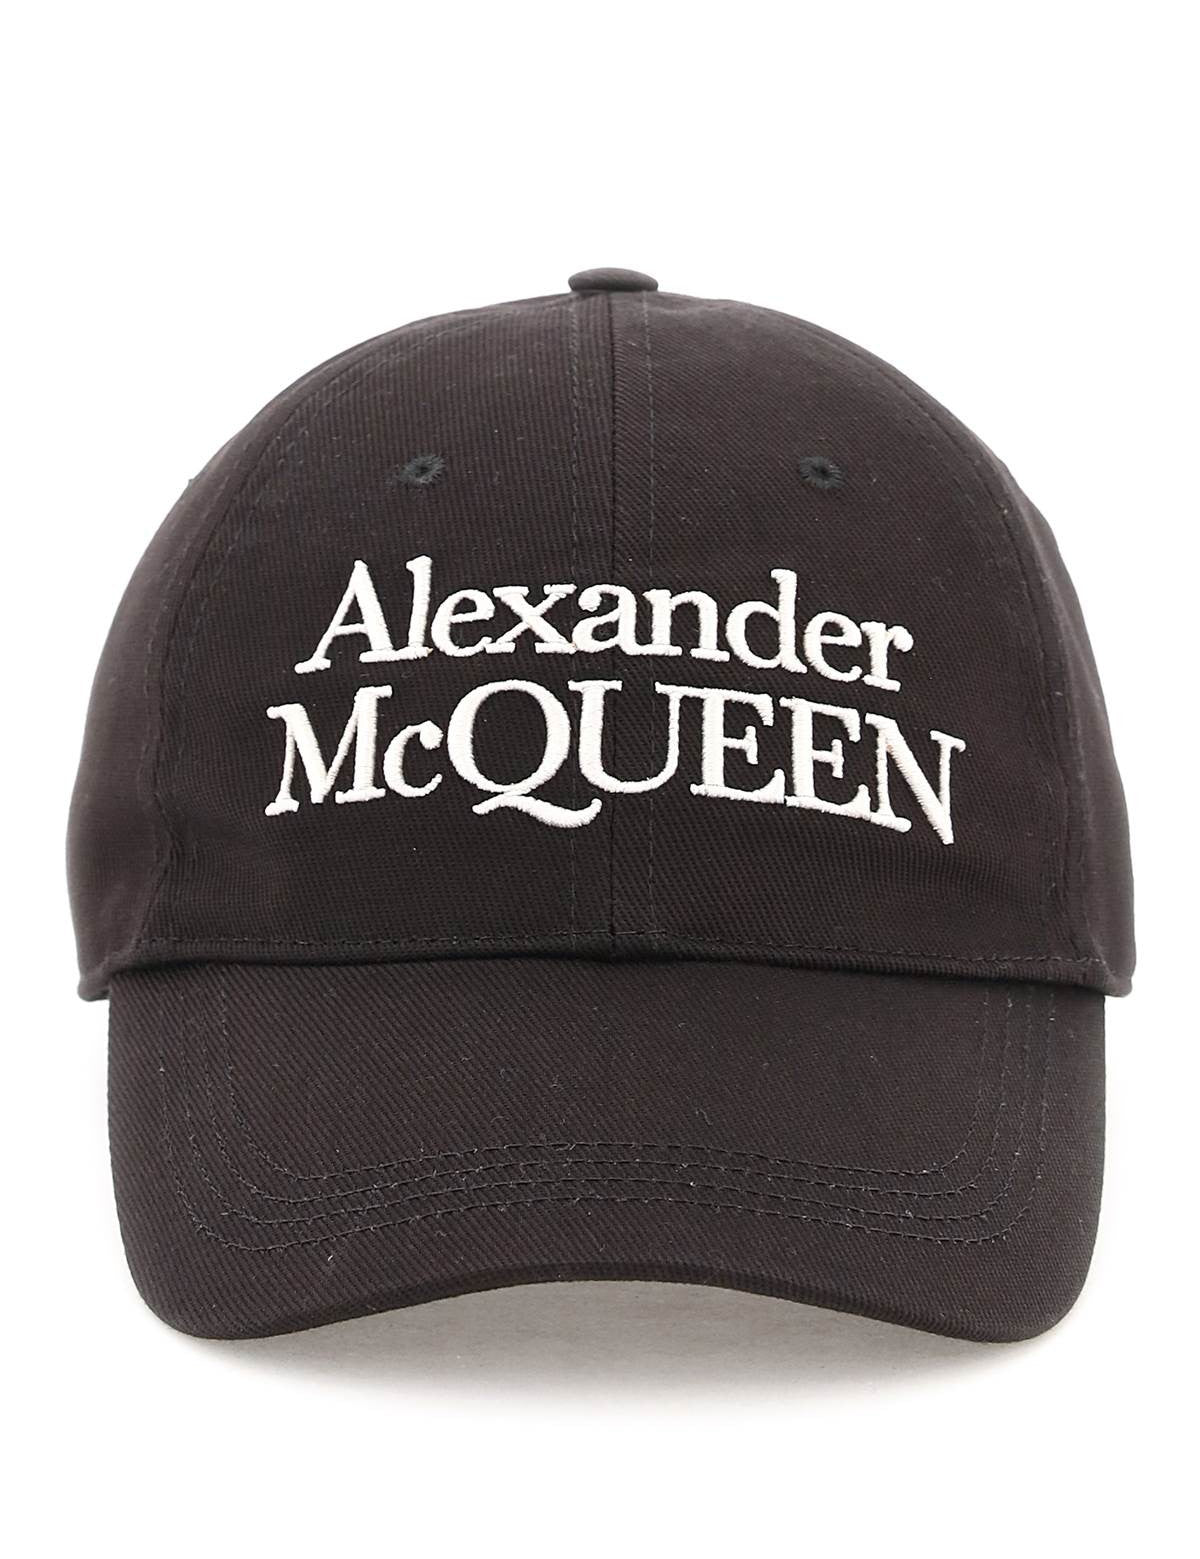 alexander-mcqueen-baseball-cap-with-embroidery.jpg